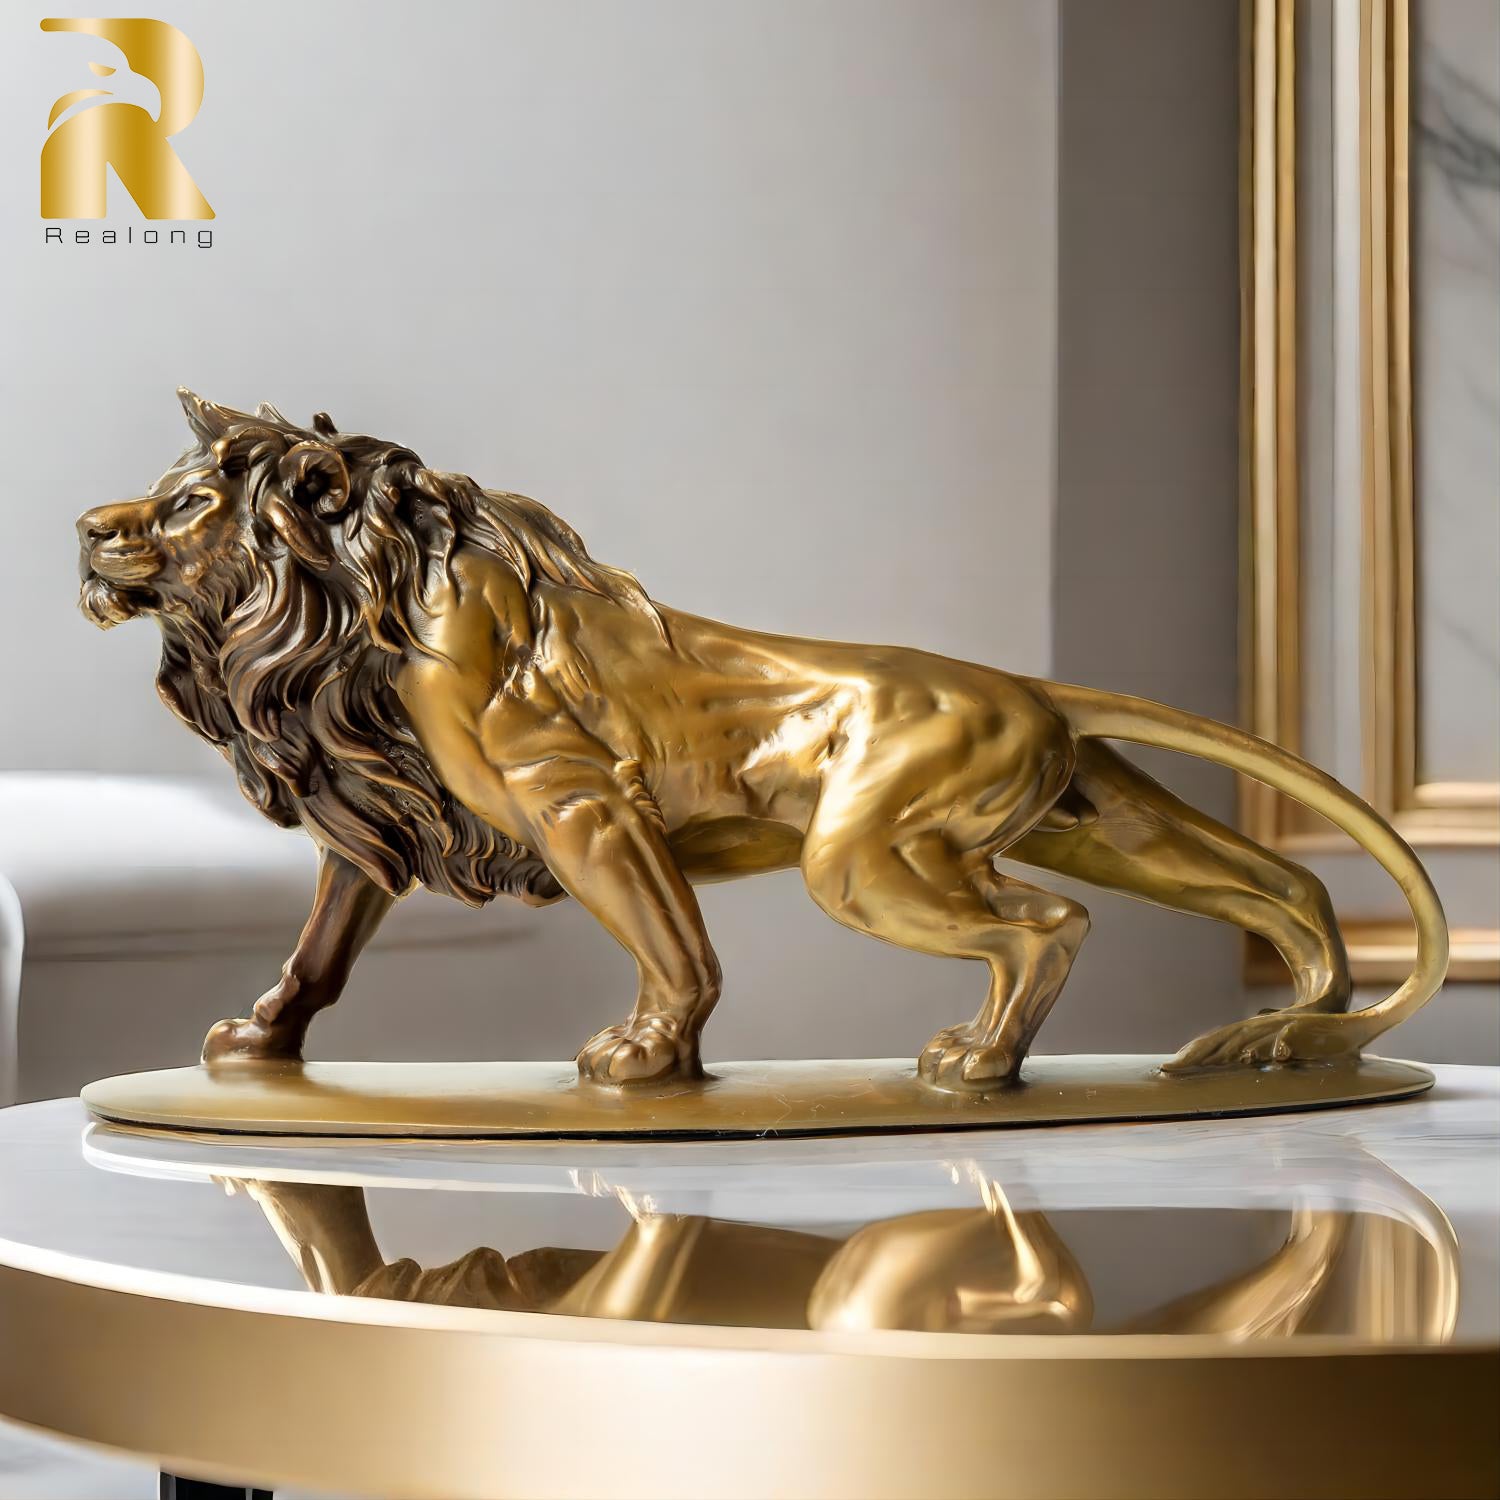 Bronze Lion Statue Casting Bronze Lion Sculpture Exquisite Art Crafts For Home Office Decoration Luxury Ornament Tasteful Gifts